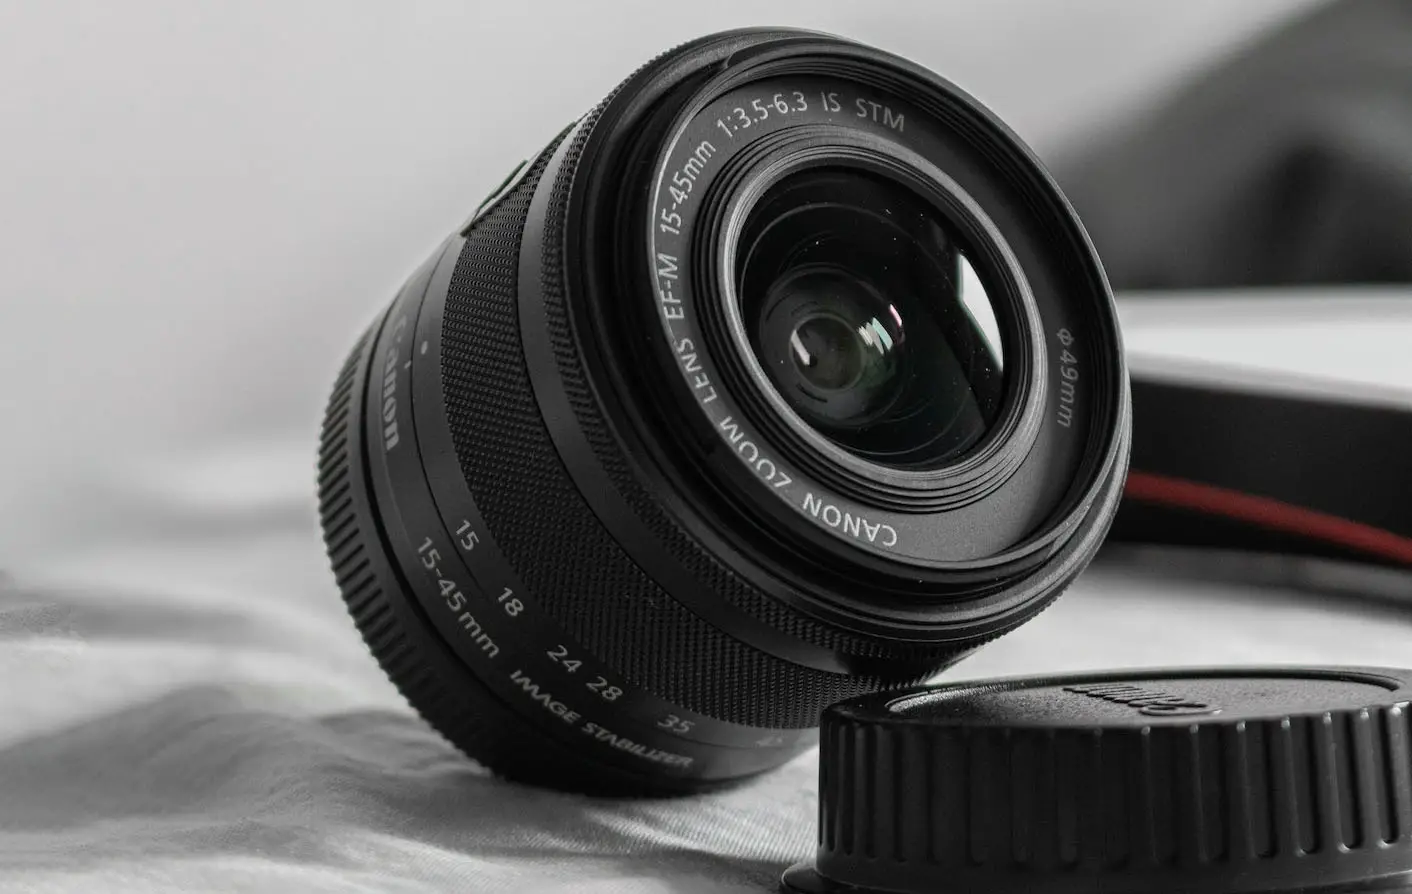 Best Lens for Close-Up Shots